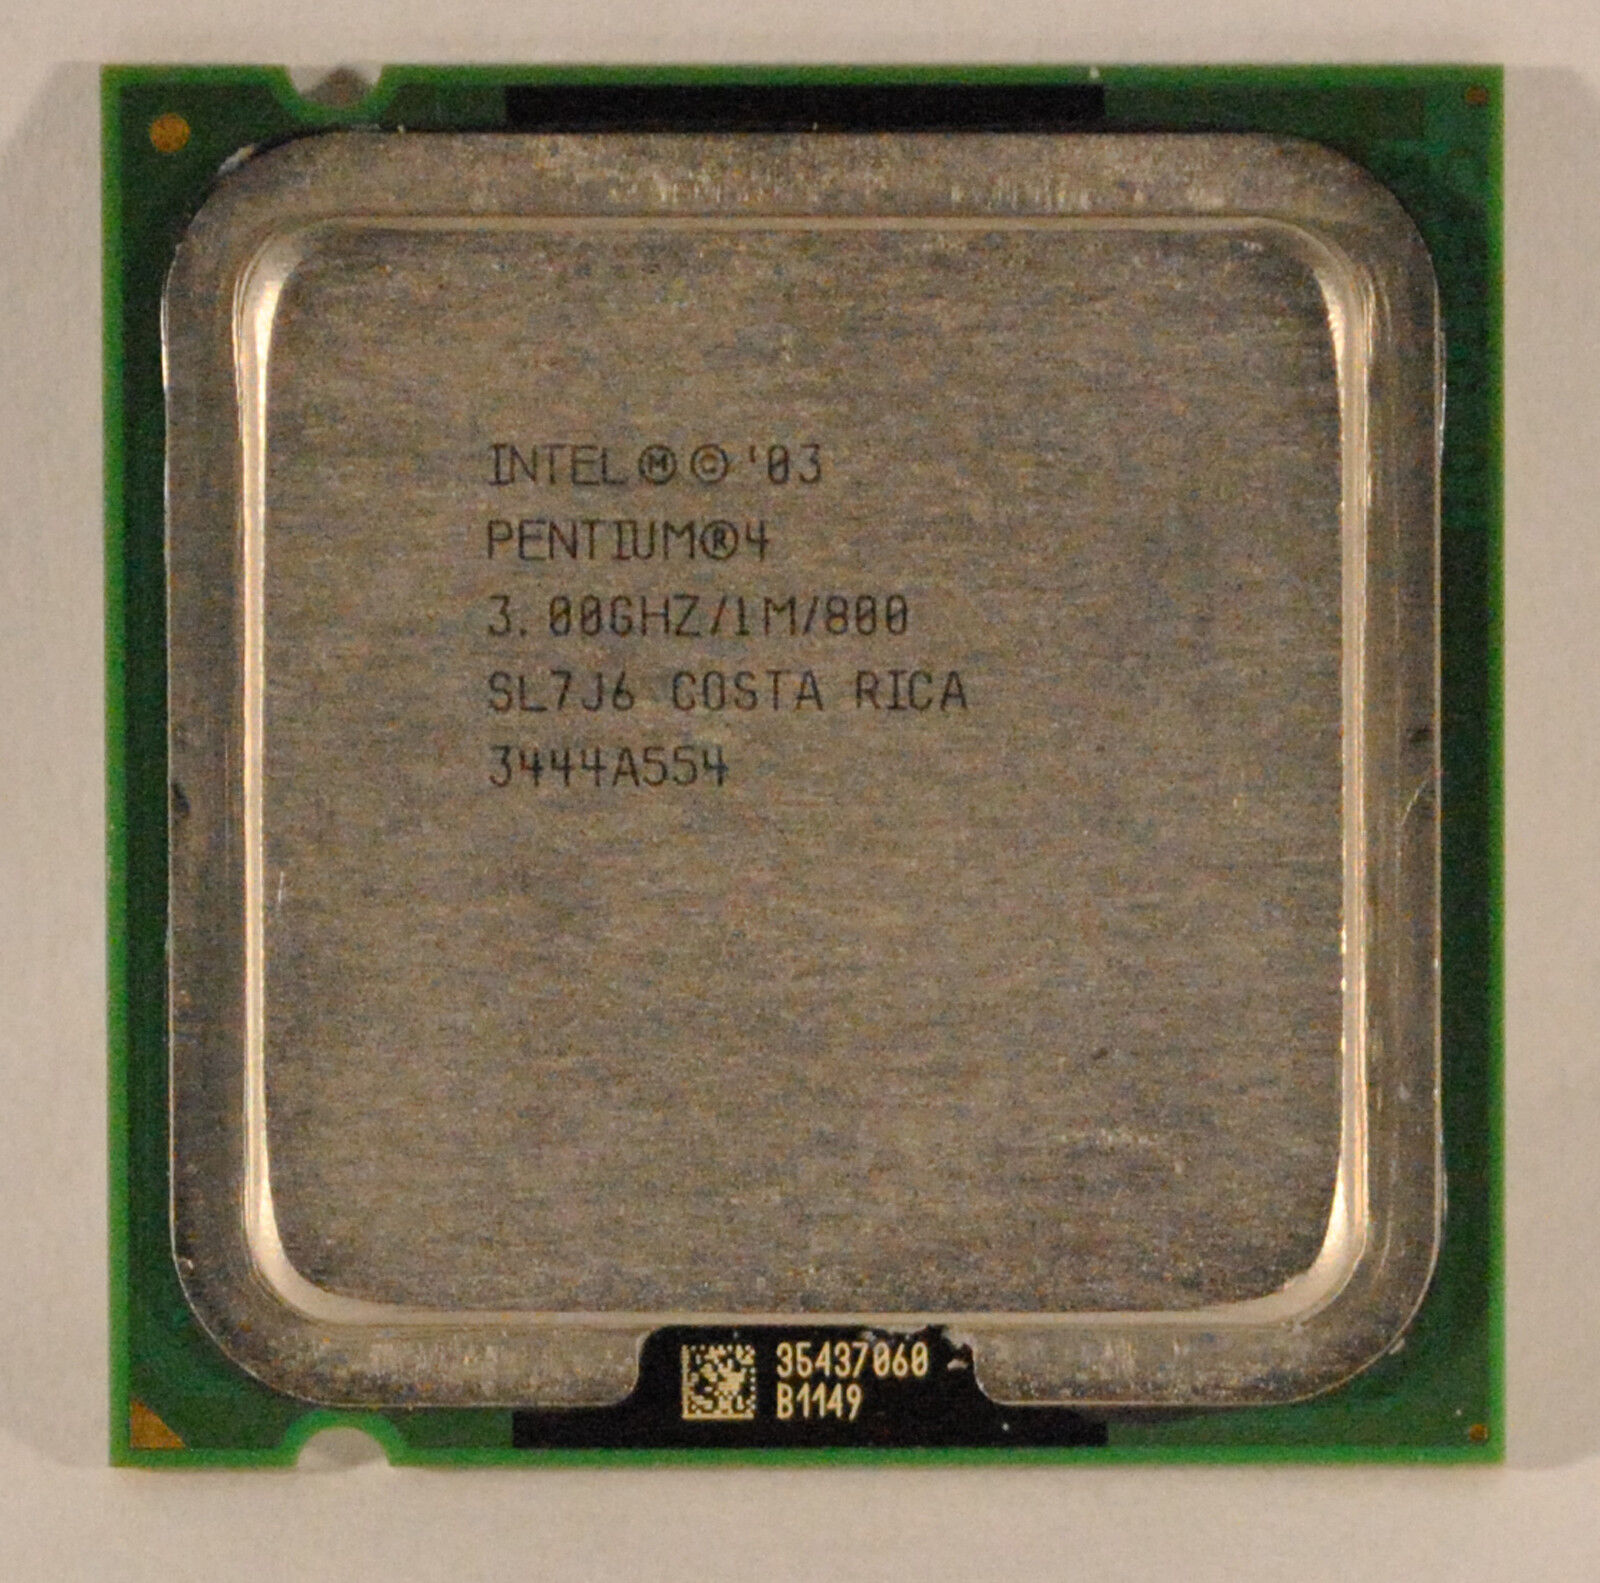 Процессор Intel Pentium 4 lga775. Intel Pentium 4 sl7pu l448a711. Интел пентиум 4 3 ГГЦ. Intel Pentium 4 540j Prescott lga775, 1 x 3200 МГЦ.